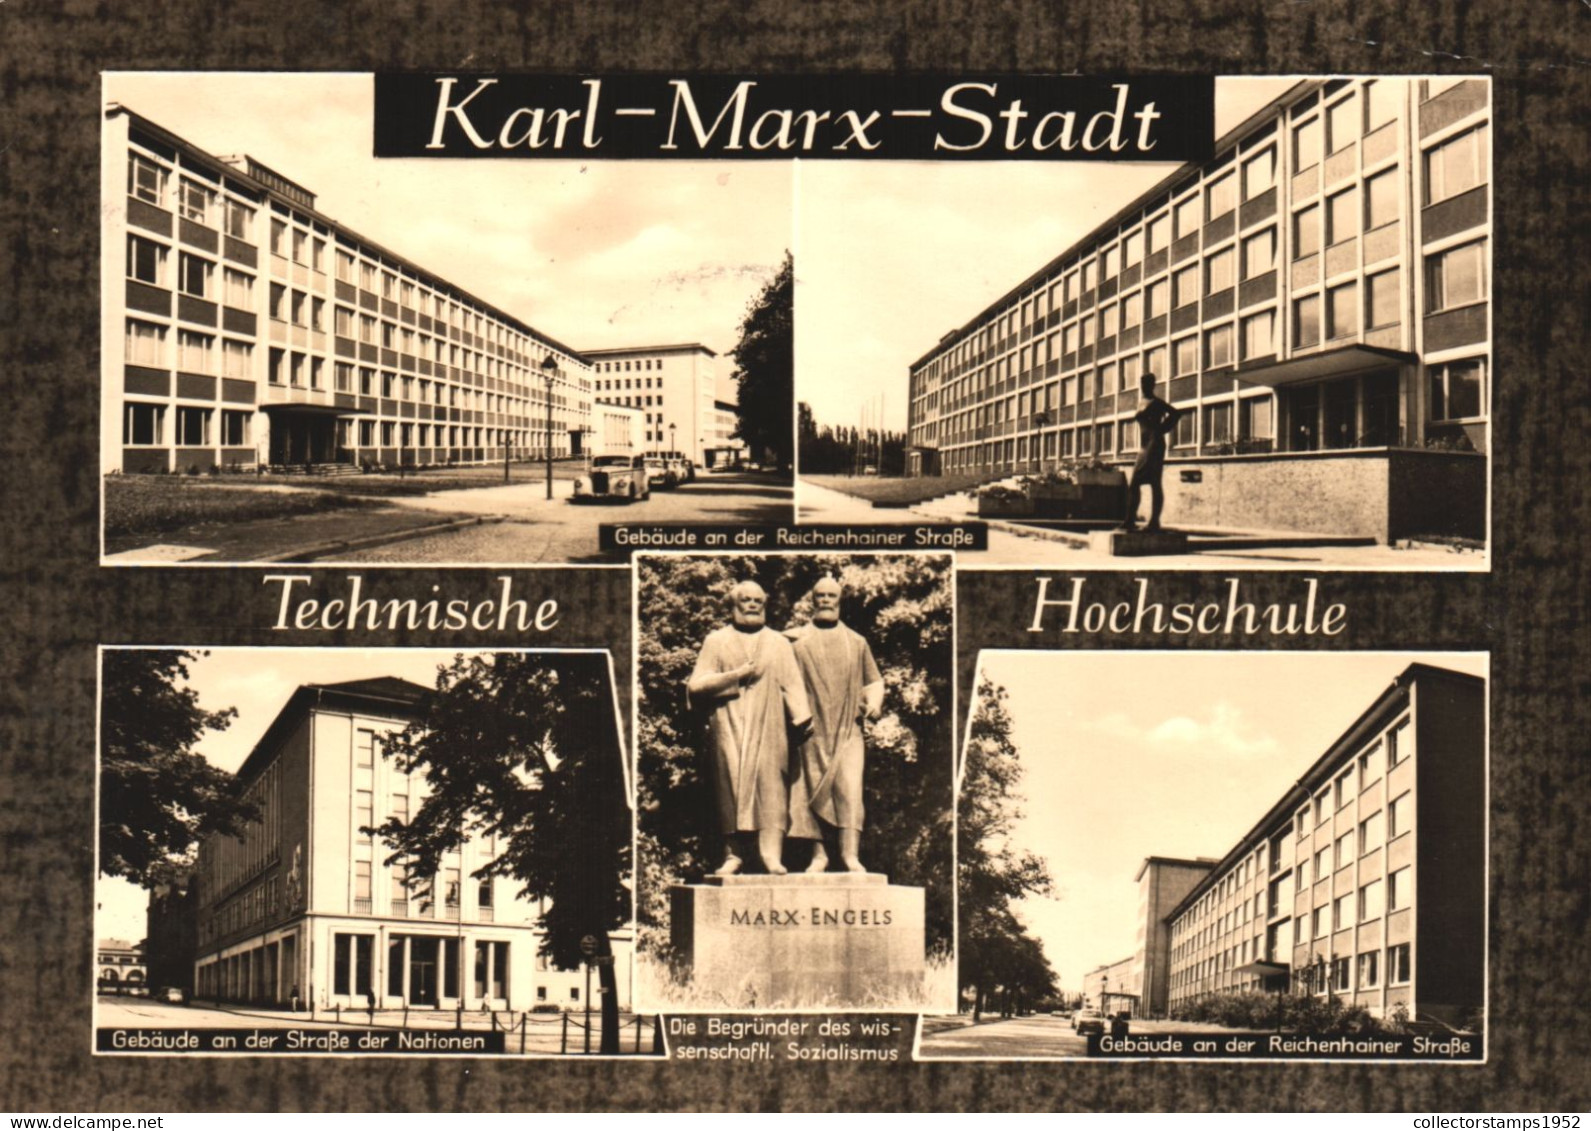 CHEMNITZ, KARL MARX STADT, MULTIPLE VIEWS, ARCHITECTURE, CARS, STATUE, GERMANY - Chemnitz (Karl-Marx-Stadt 1953-1990)